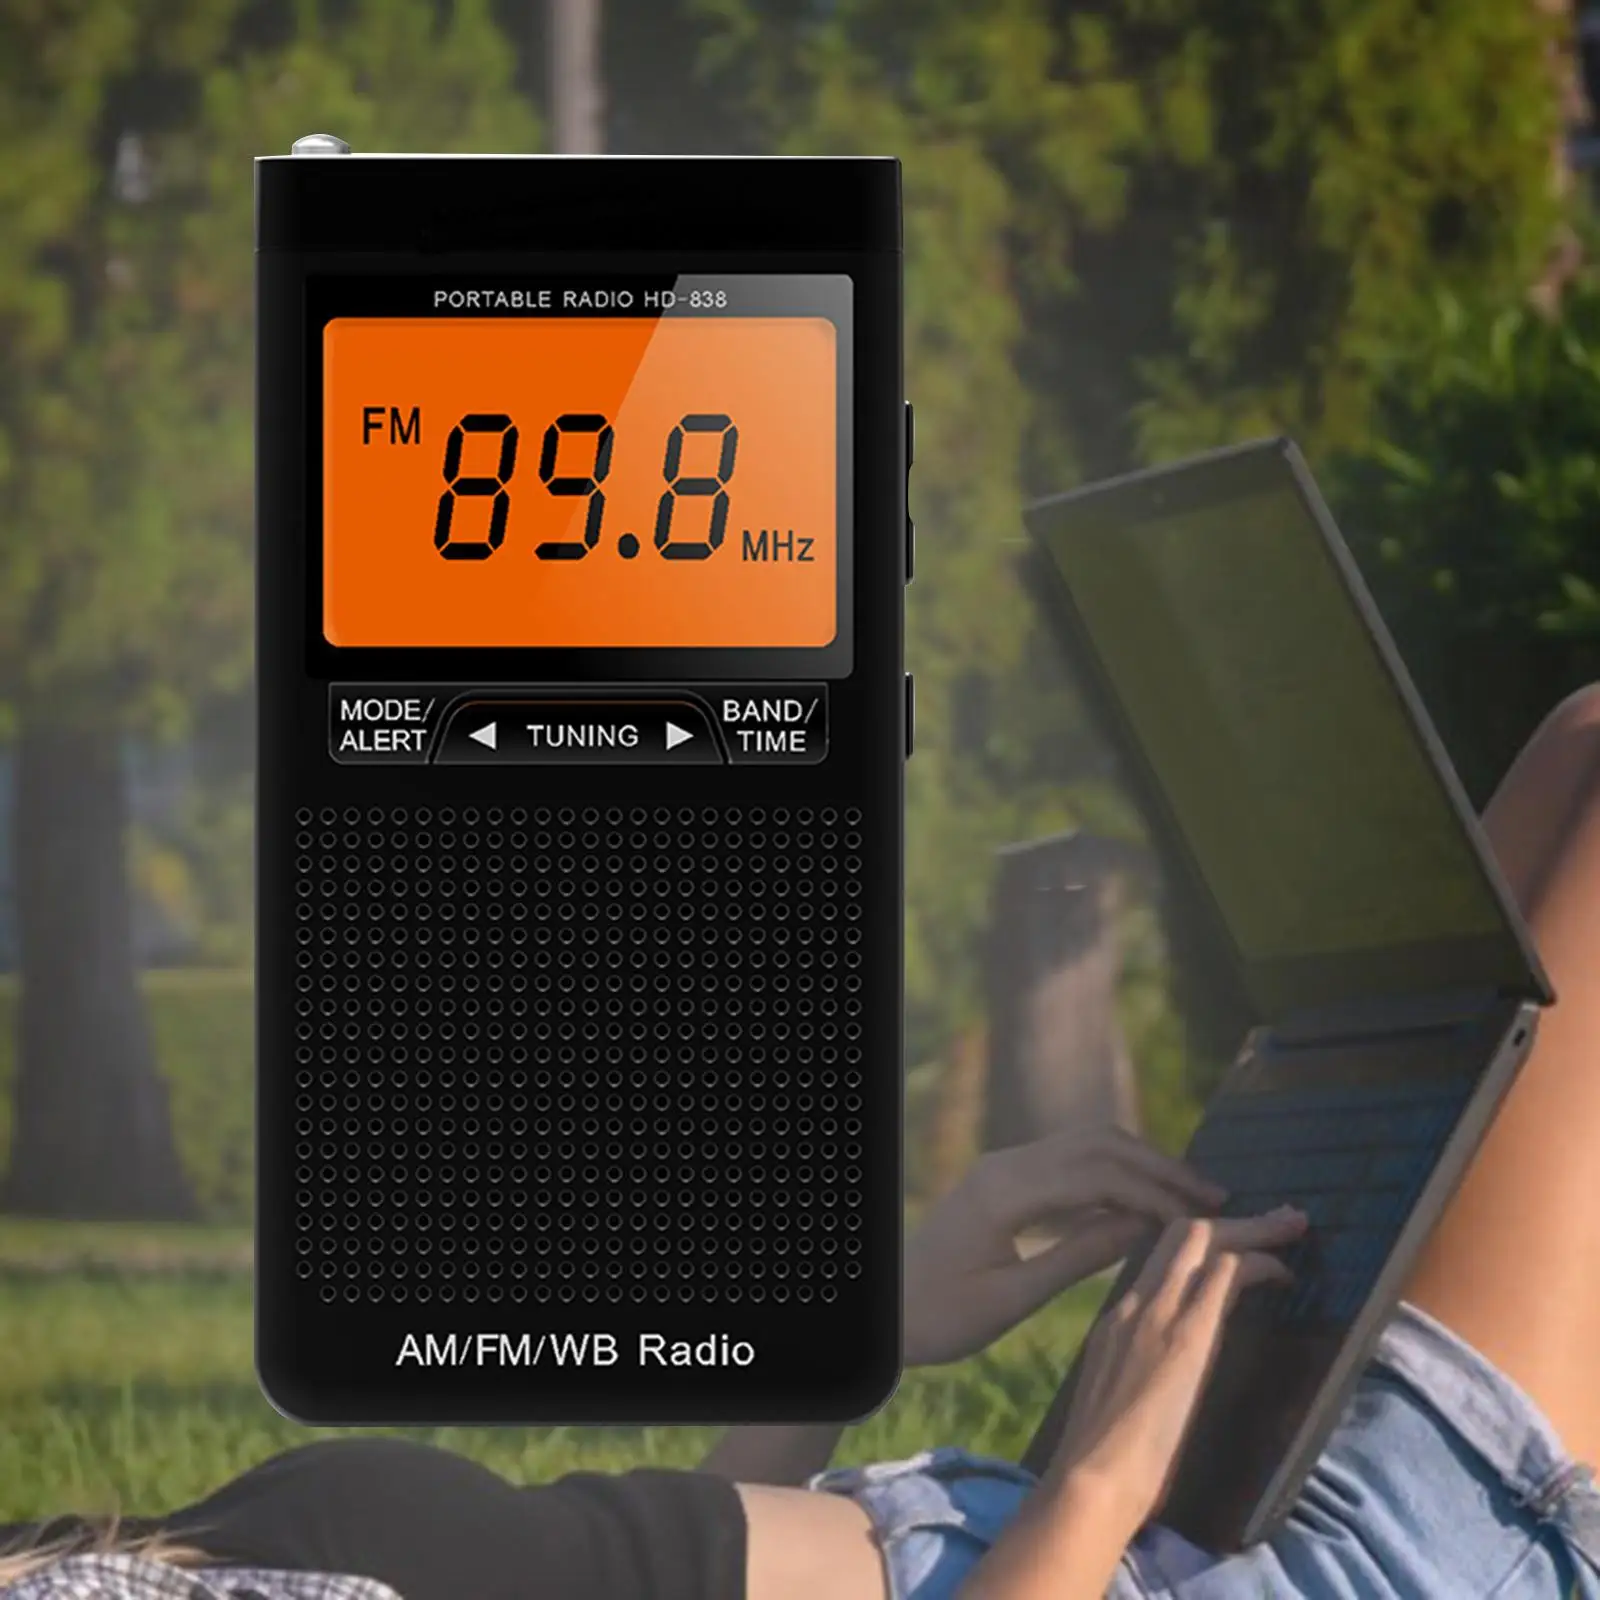 Portable Radio AM FM Digital Tuning with Headphone Jack Stereo Personal Radio Alarm Clock for Jogging Camping Walking Gym